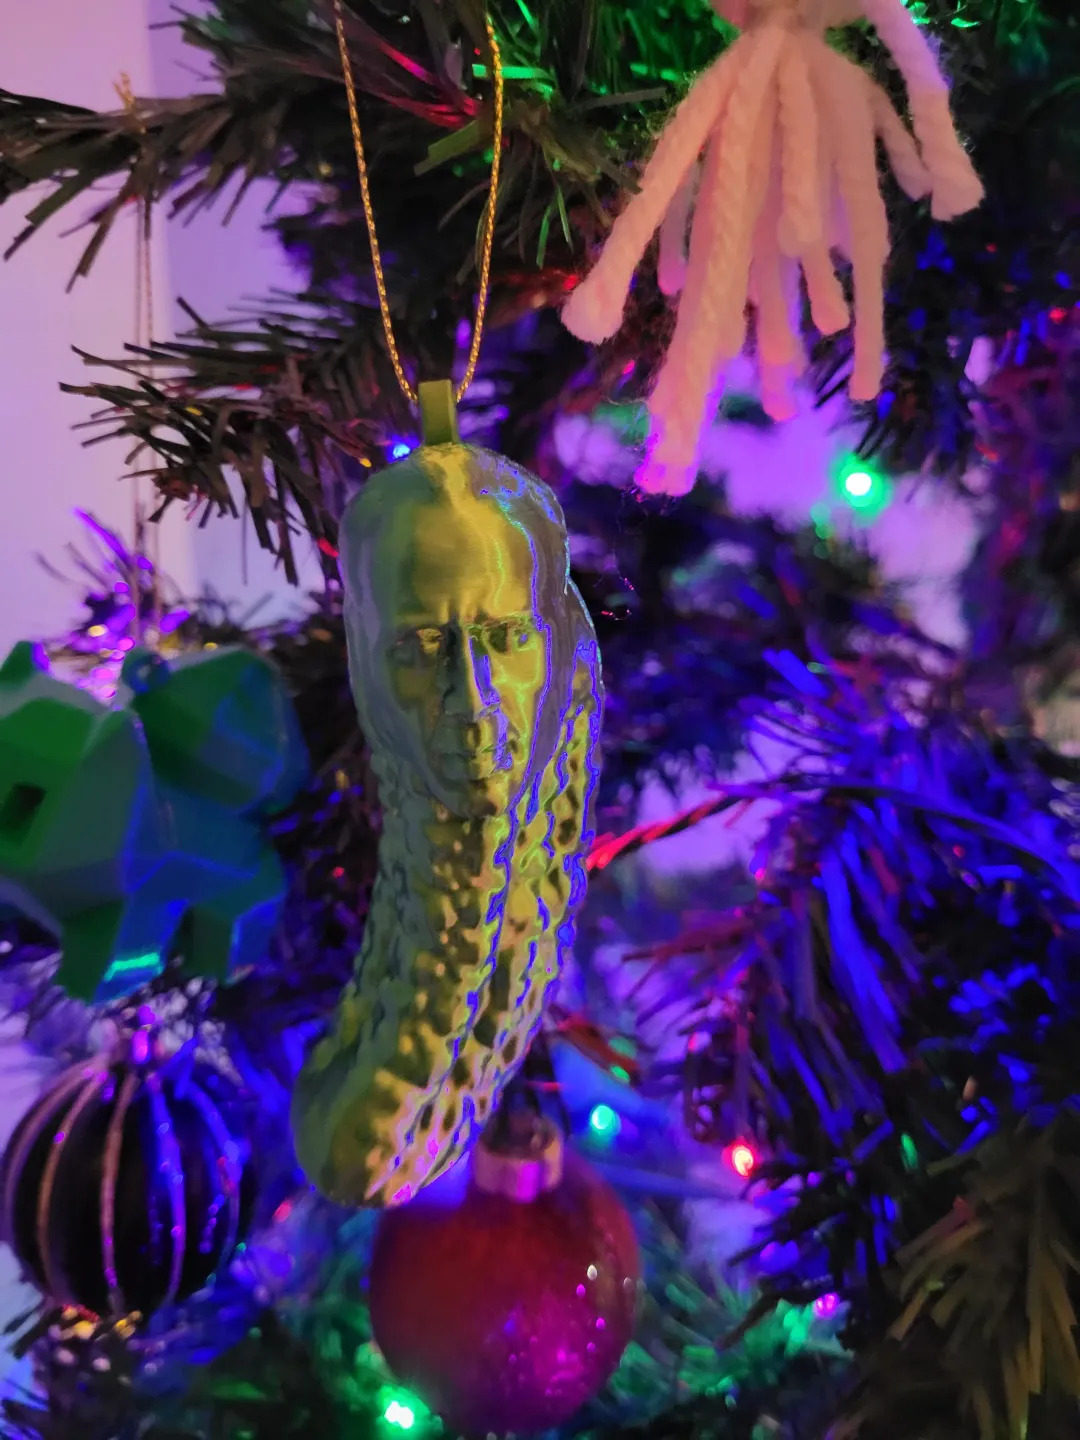 Pickle Nicolas Cage Hanging Christmas Tree Decoration - Picolas Cage Pickle Meme